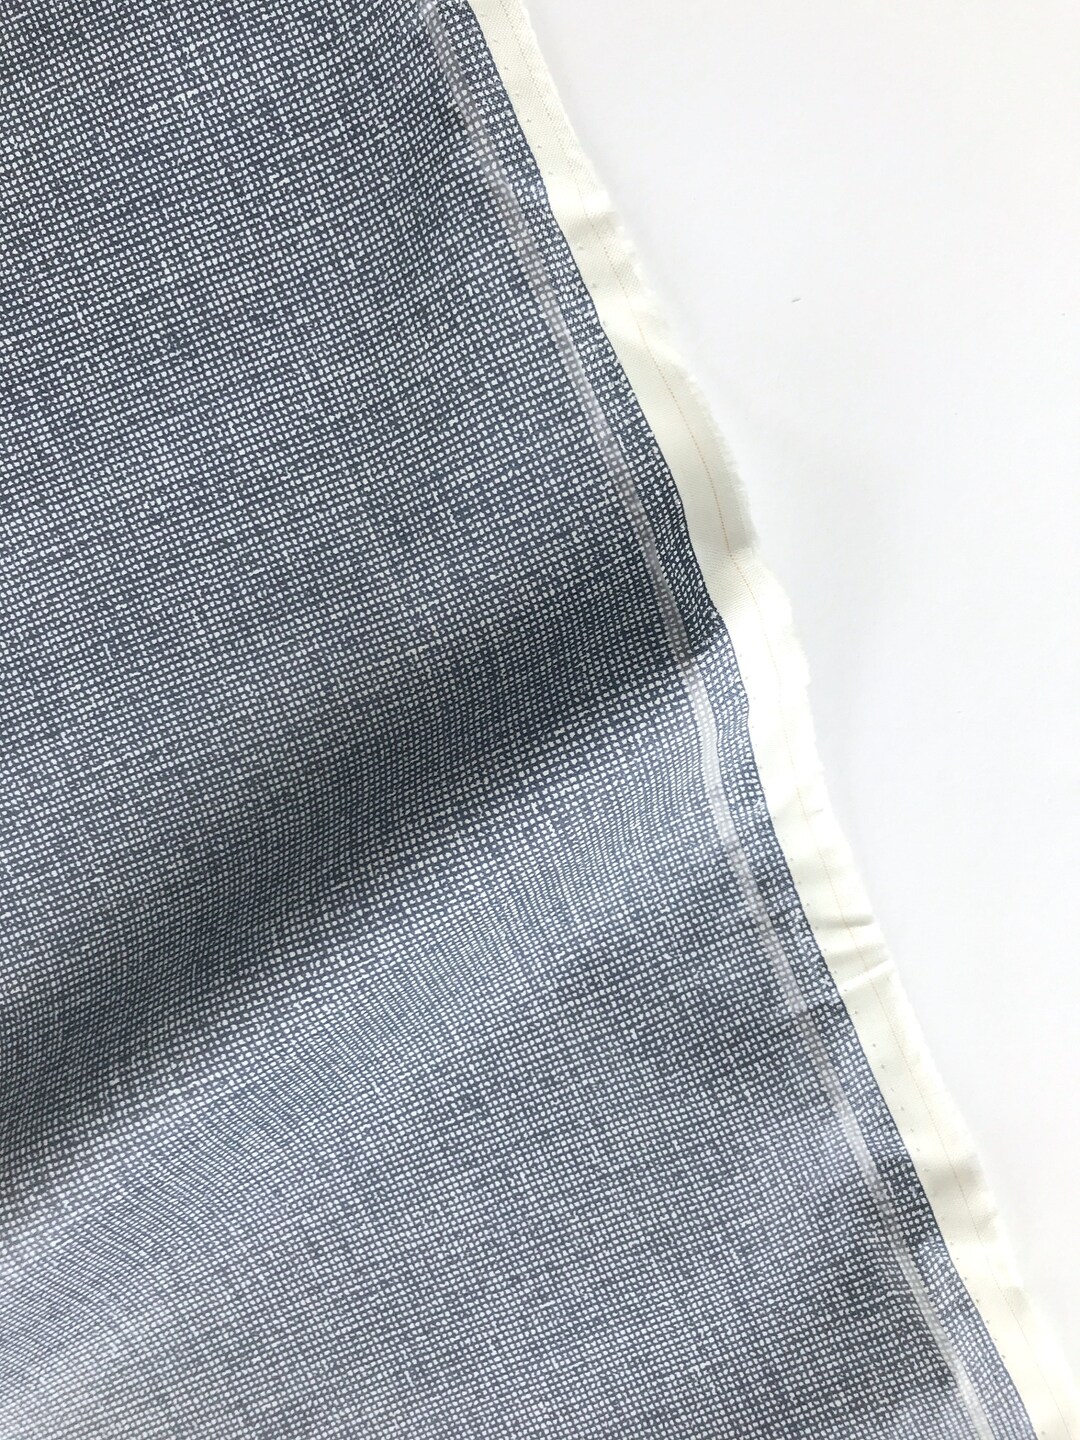 Extra Wide LAMINATED Fabric Blue Denim MATTE Finish choose - Etsy